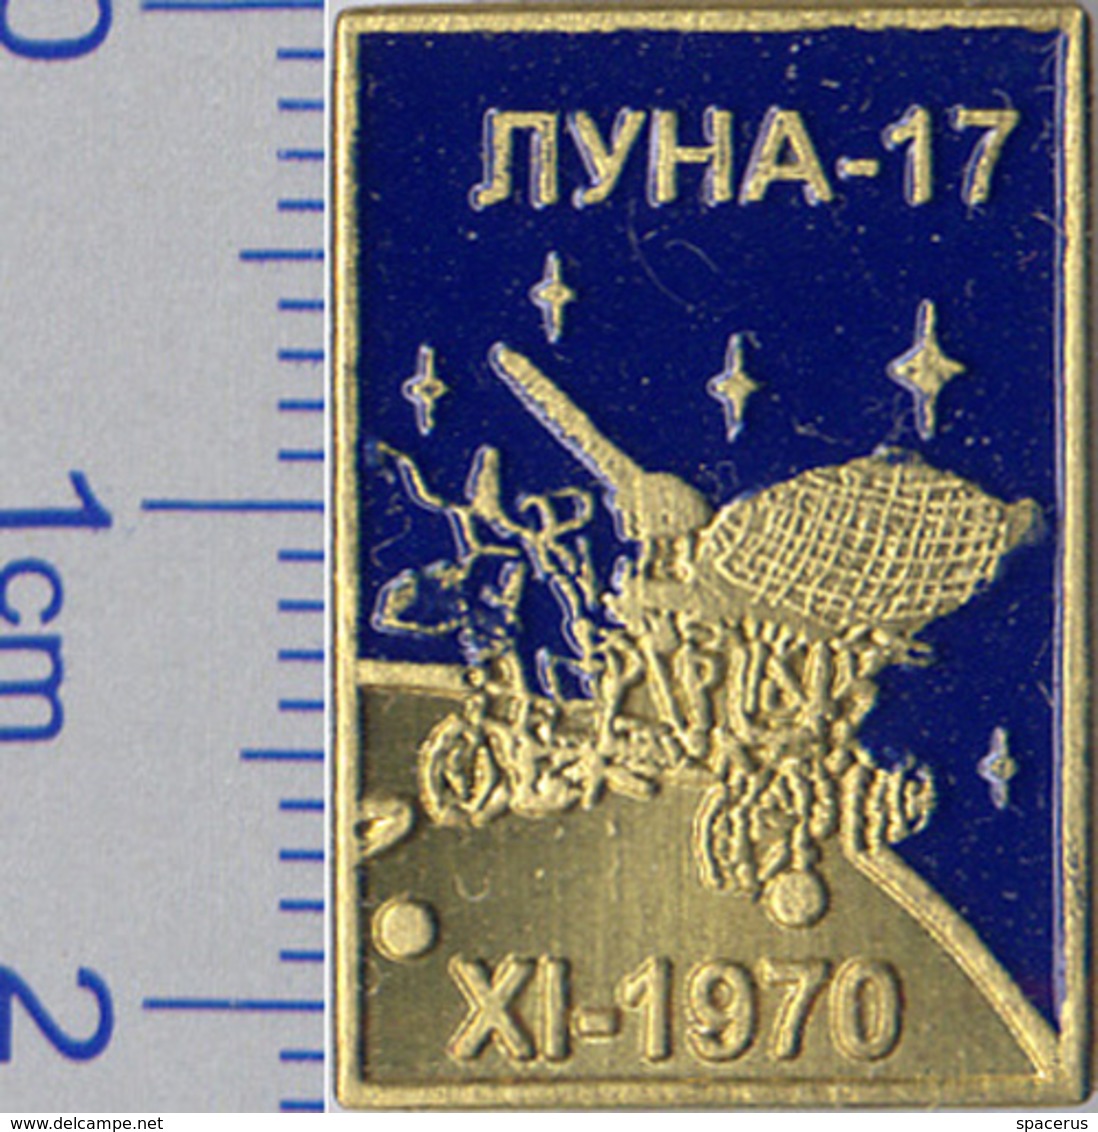 450-8 Space Russian Pins set. Luna-16,-17 Lunokhod (4pins) Soviet Moon Program Space Center "Progress" Samara 2019